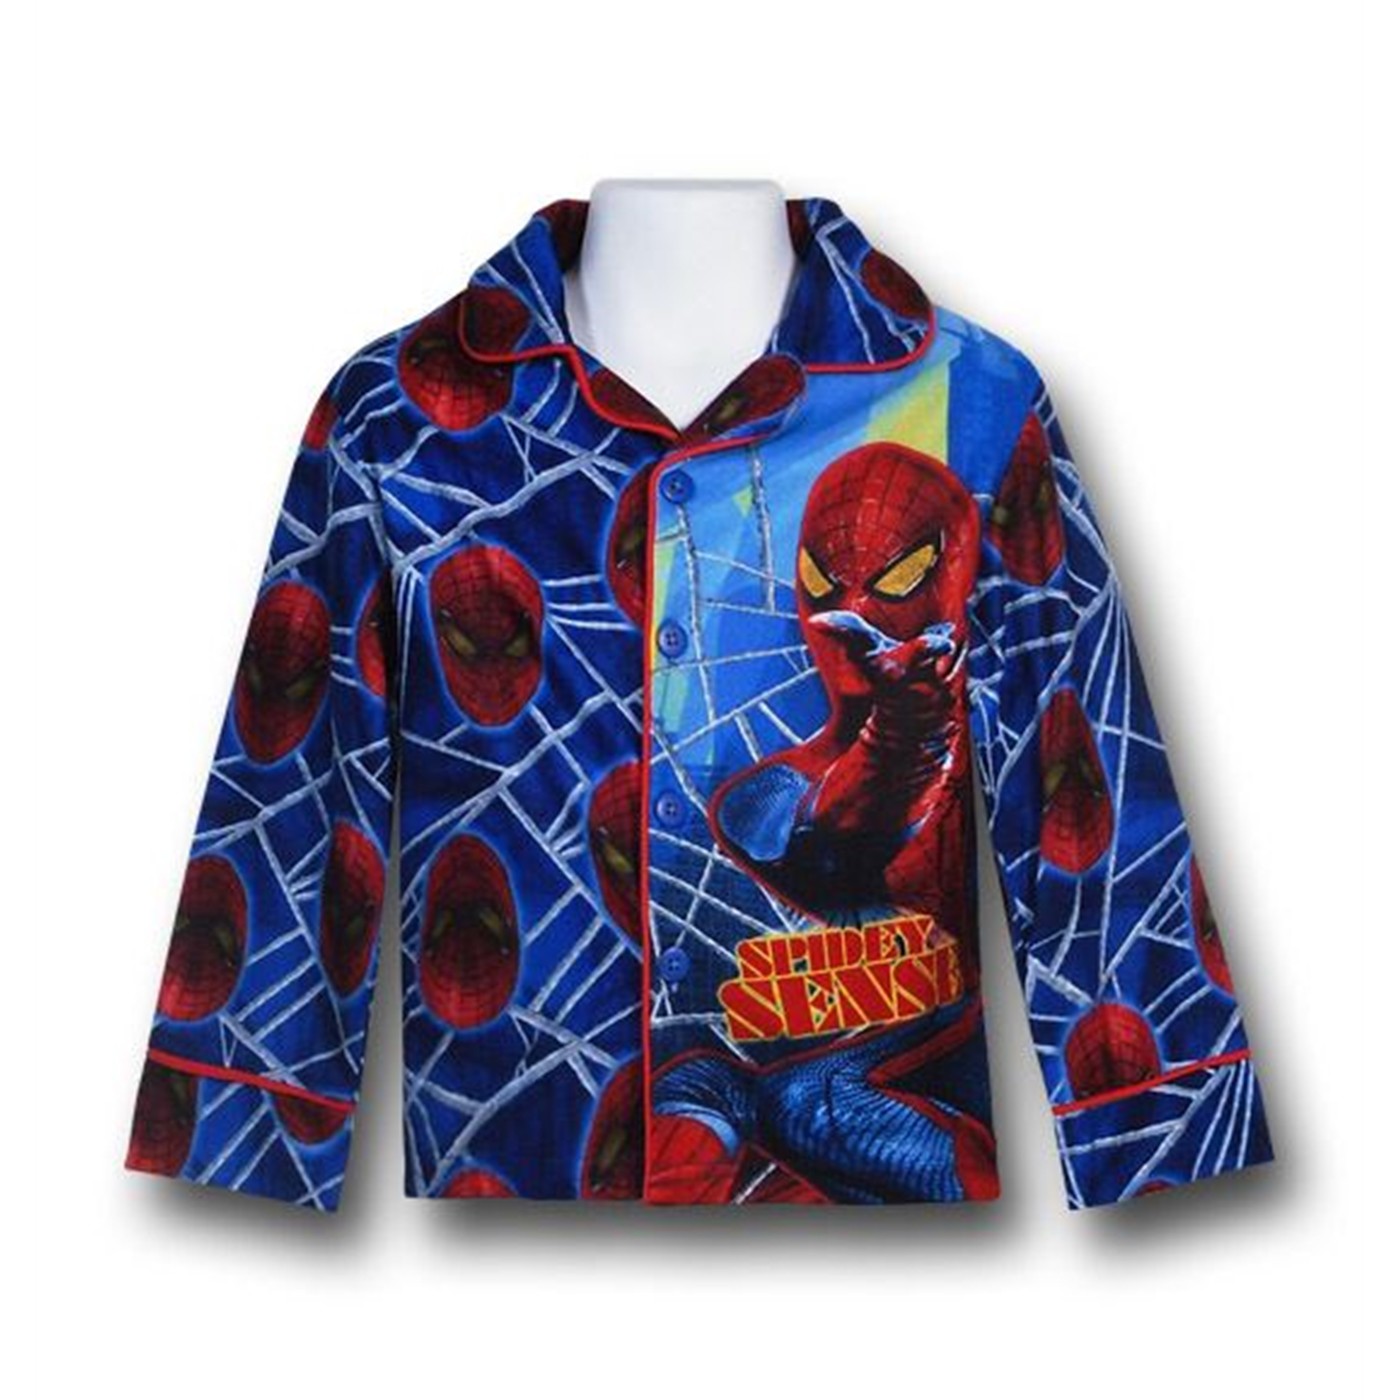 Spiderman Kids Button-Up Blue Spider Sense Pajamas